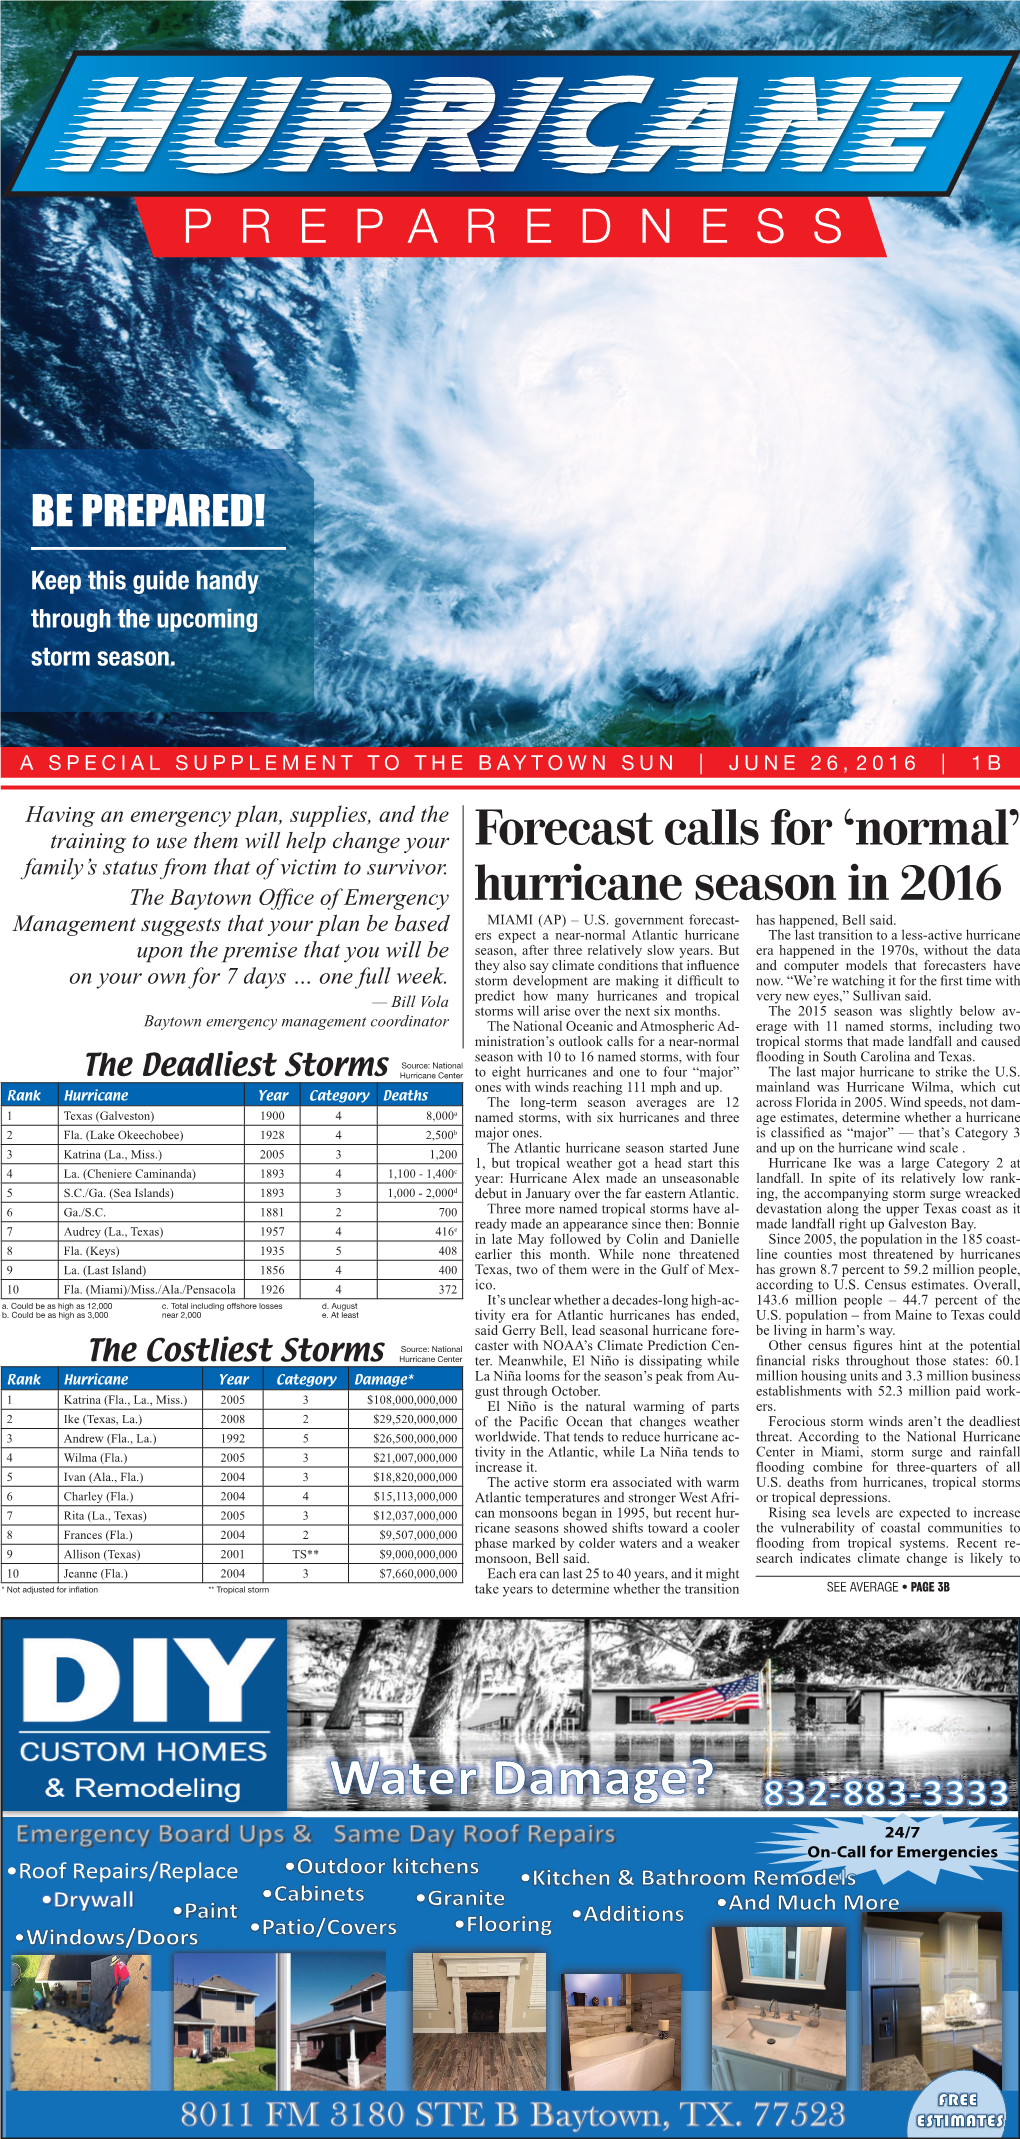 Hurricane Season in 2016 MIAMI (AP) – U.S